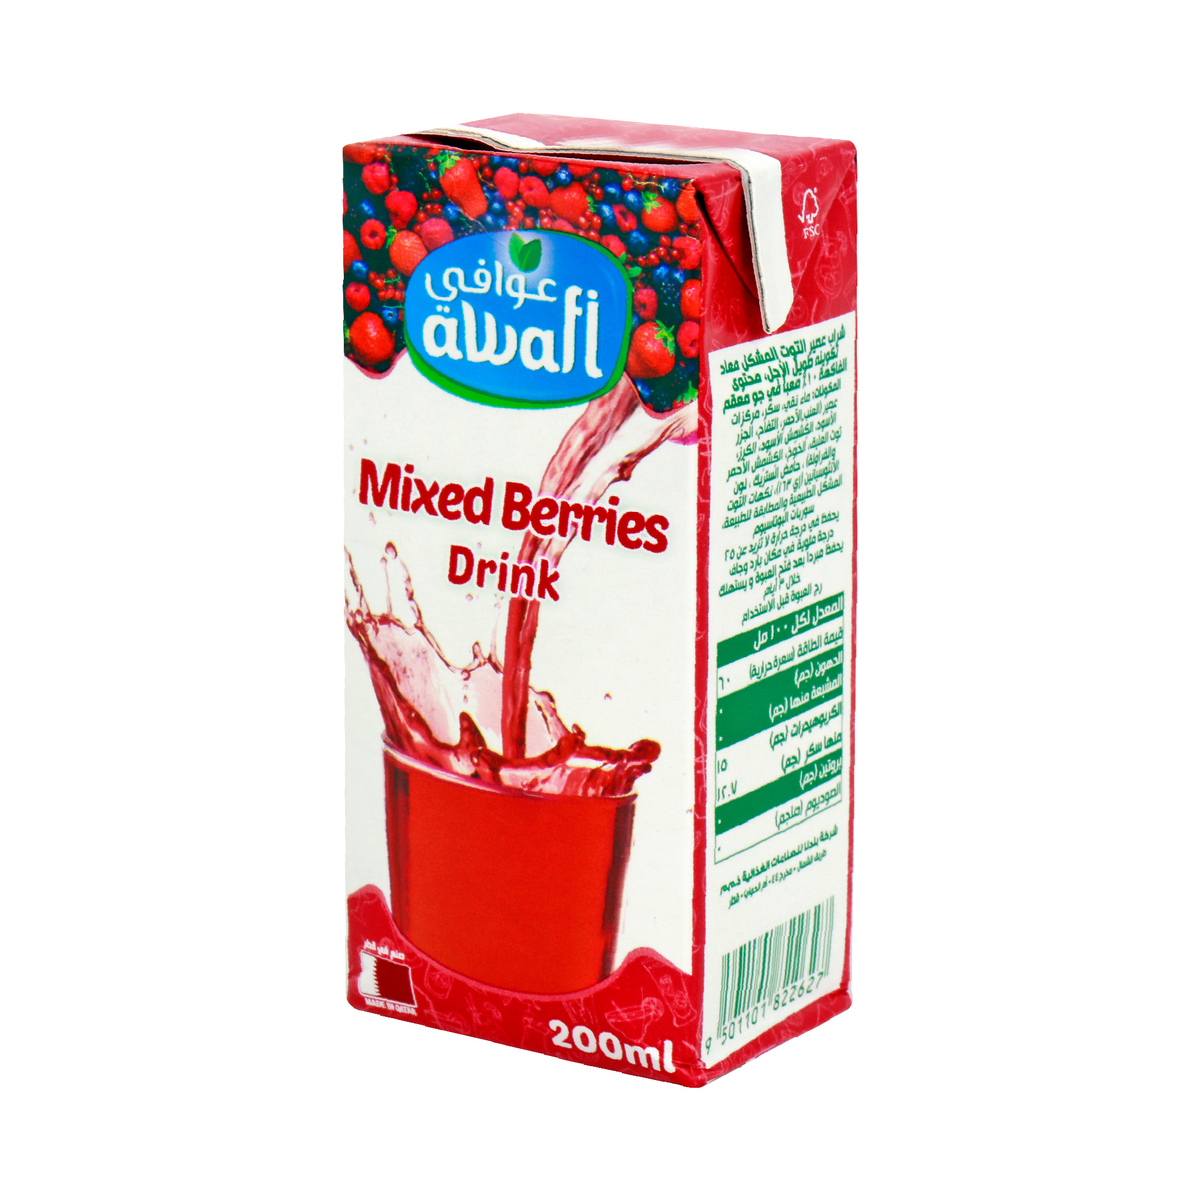 Awafi Mixed Berries Drink 200ml